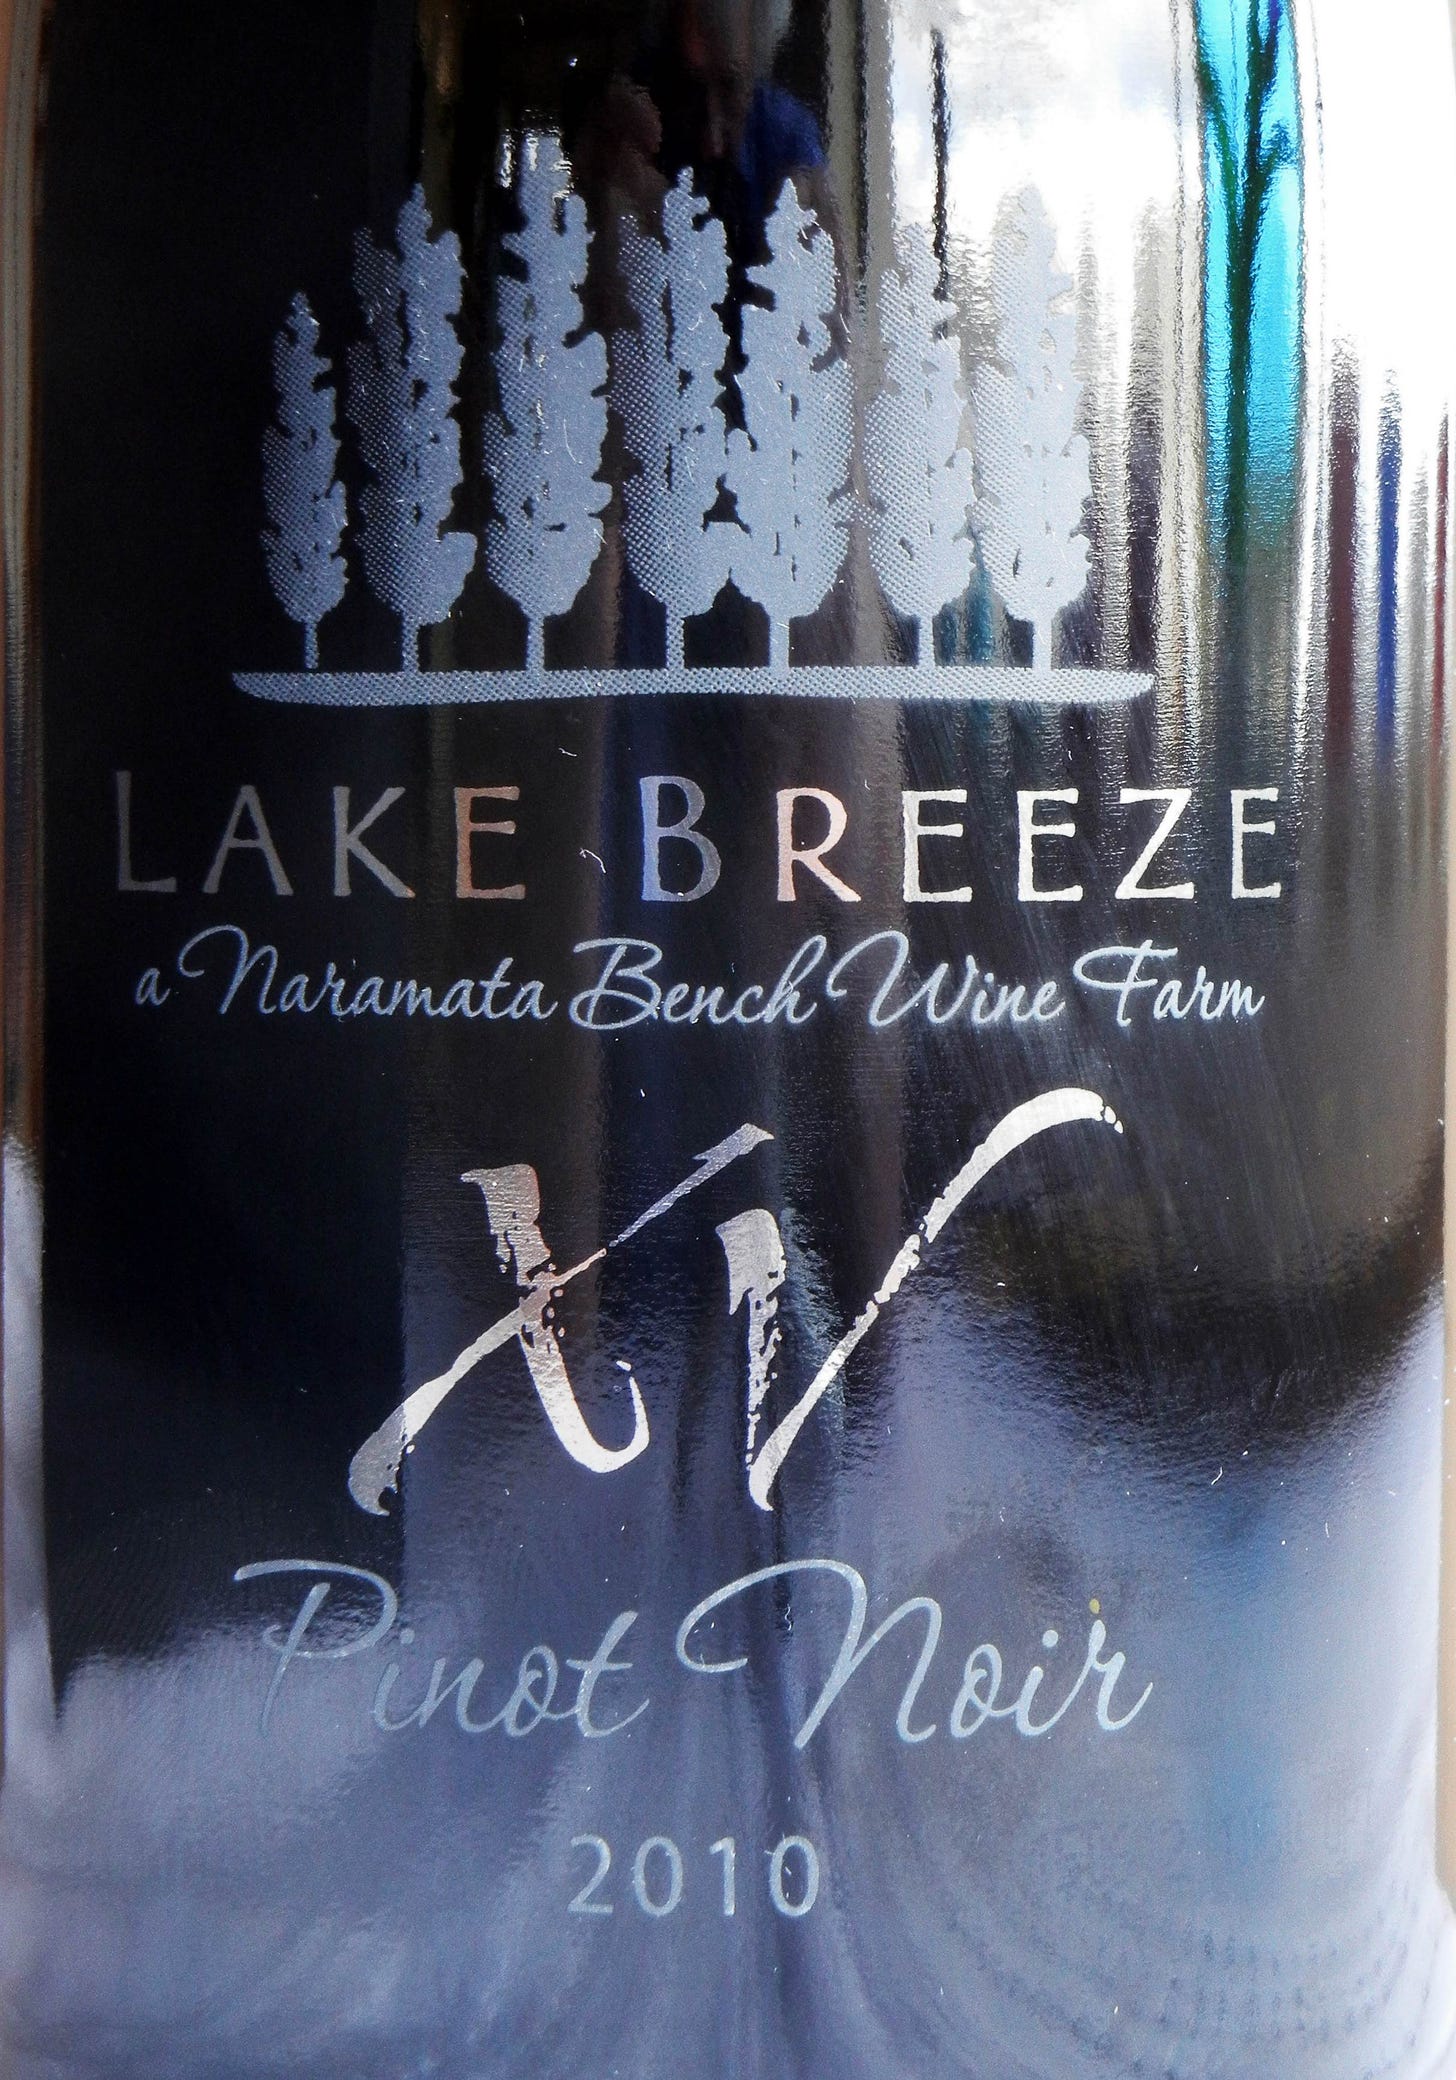 Lake Breeze XV Pinot Noir 2010 Label - BC Pinot Noir Tasting Review 20